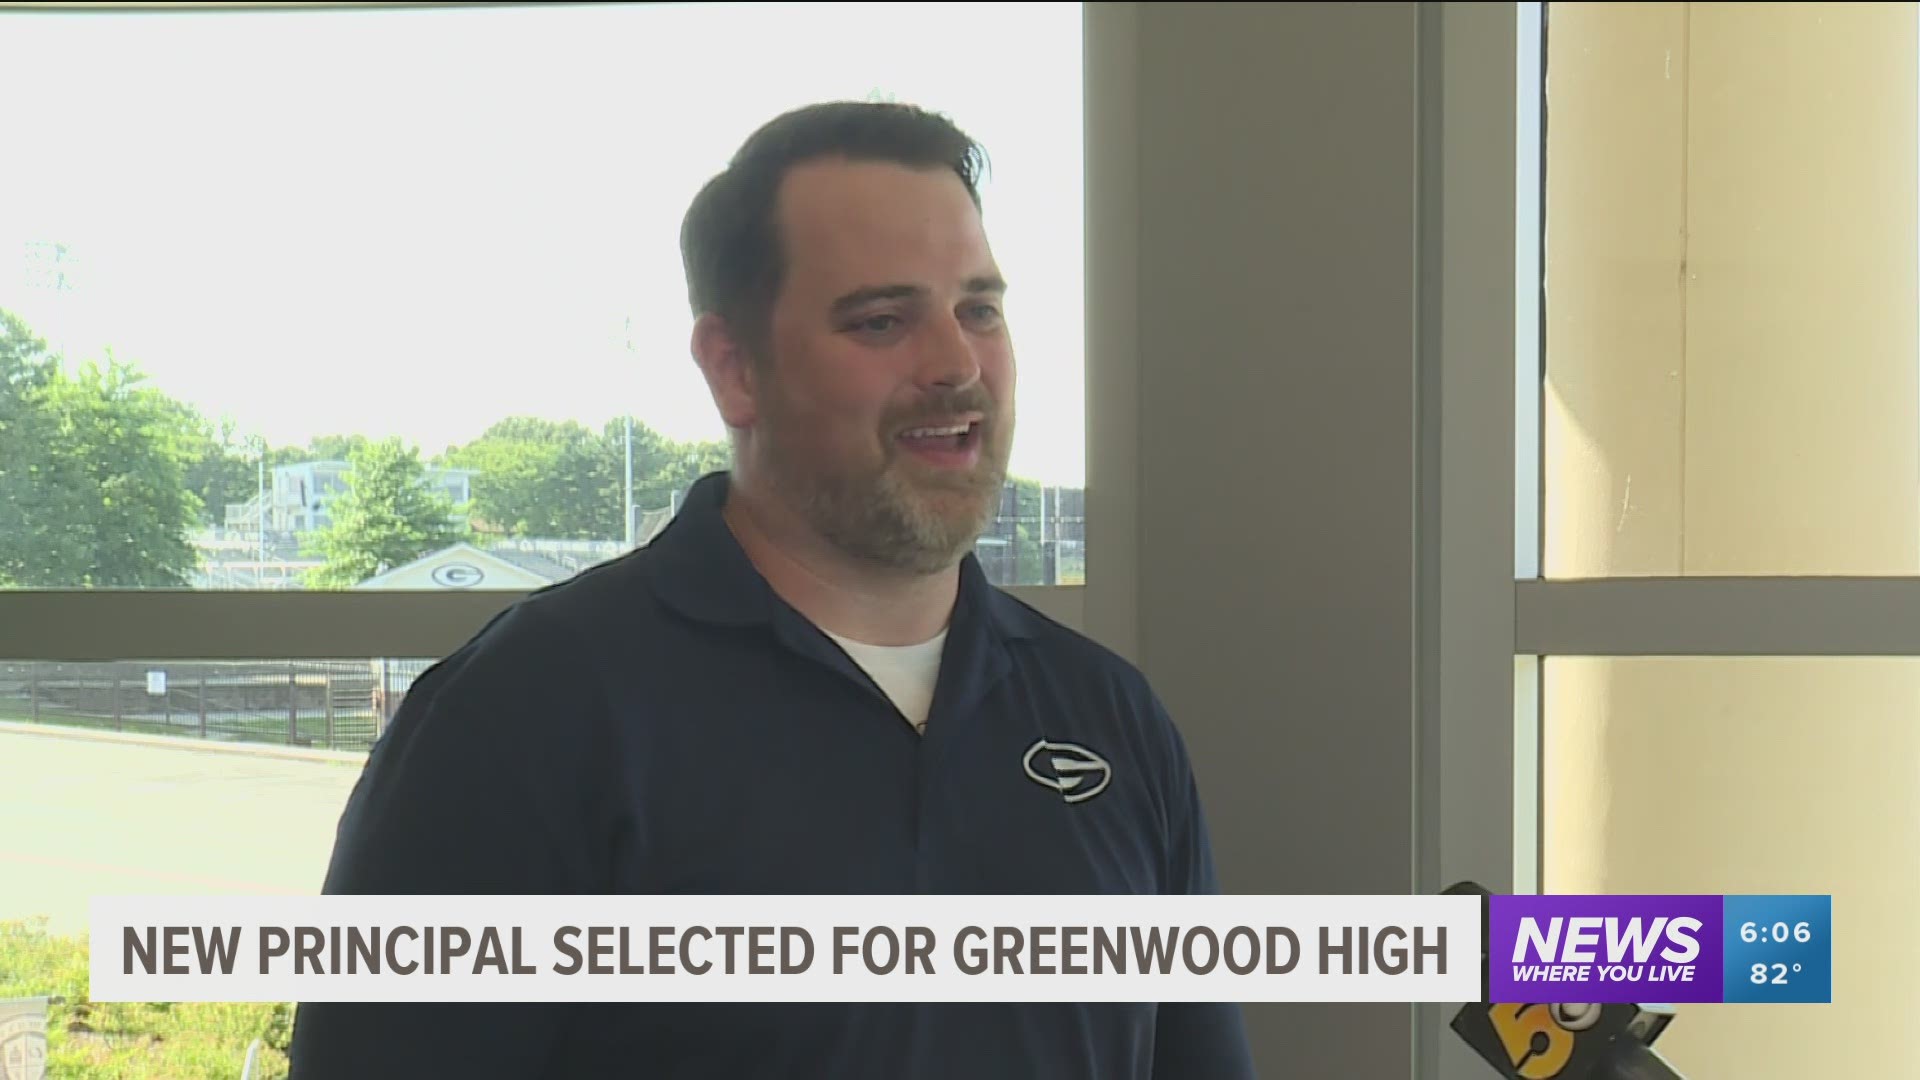 Josh Ray has been named the new principal for Greenwood High School following the tragic death of former principal Aaron Gamble.